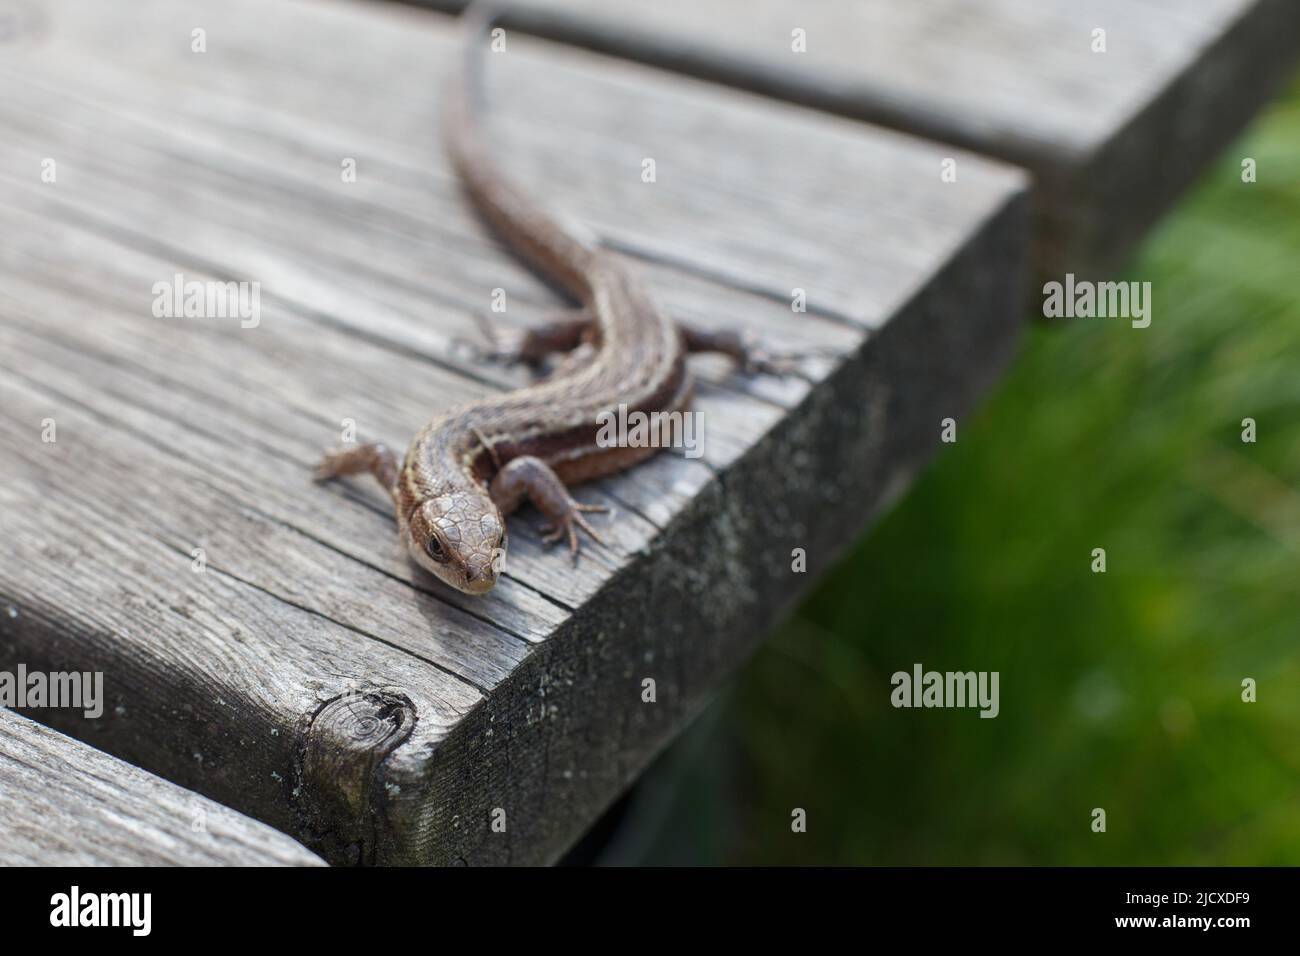 a brown lizard on a wooden board in summer garden on a green grass background Stock Photo